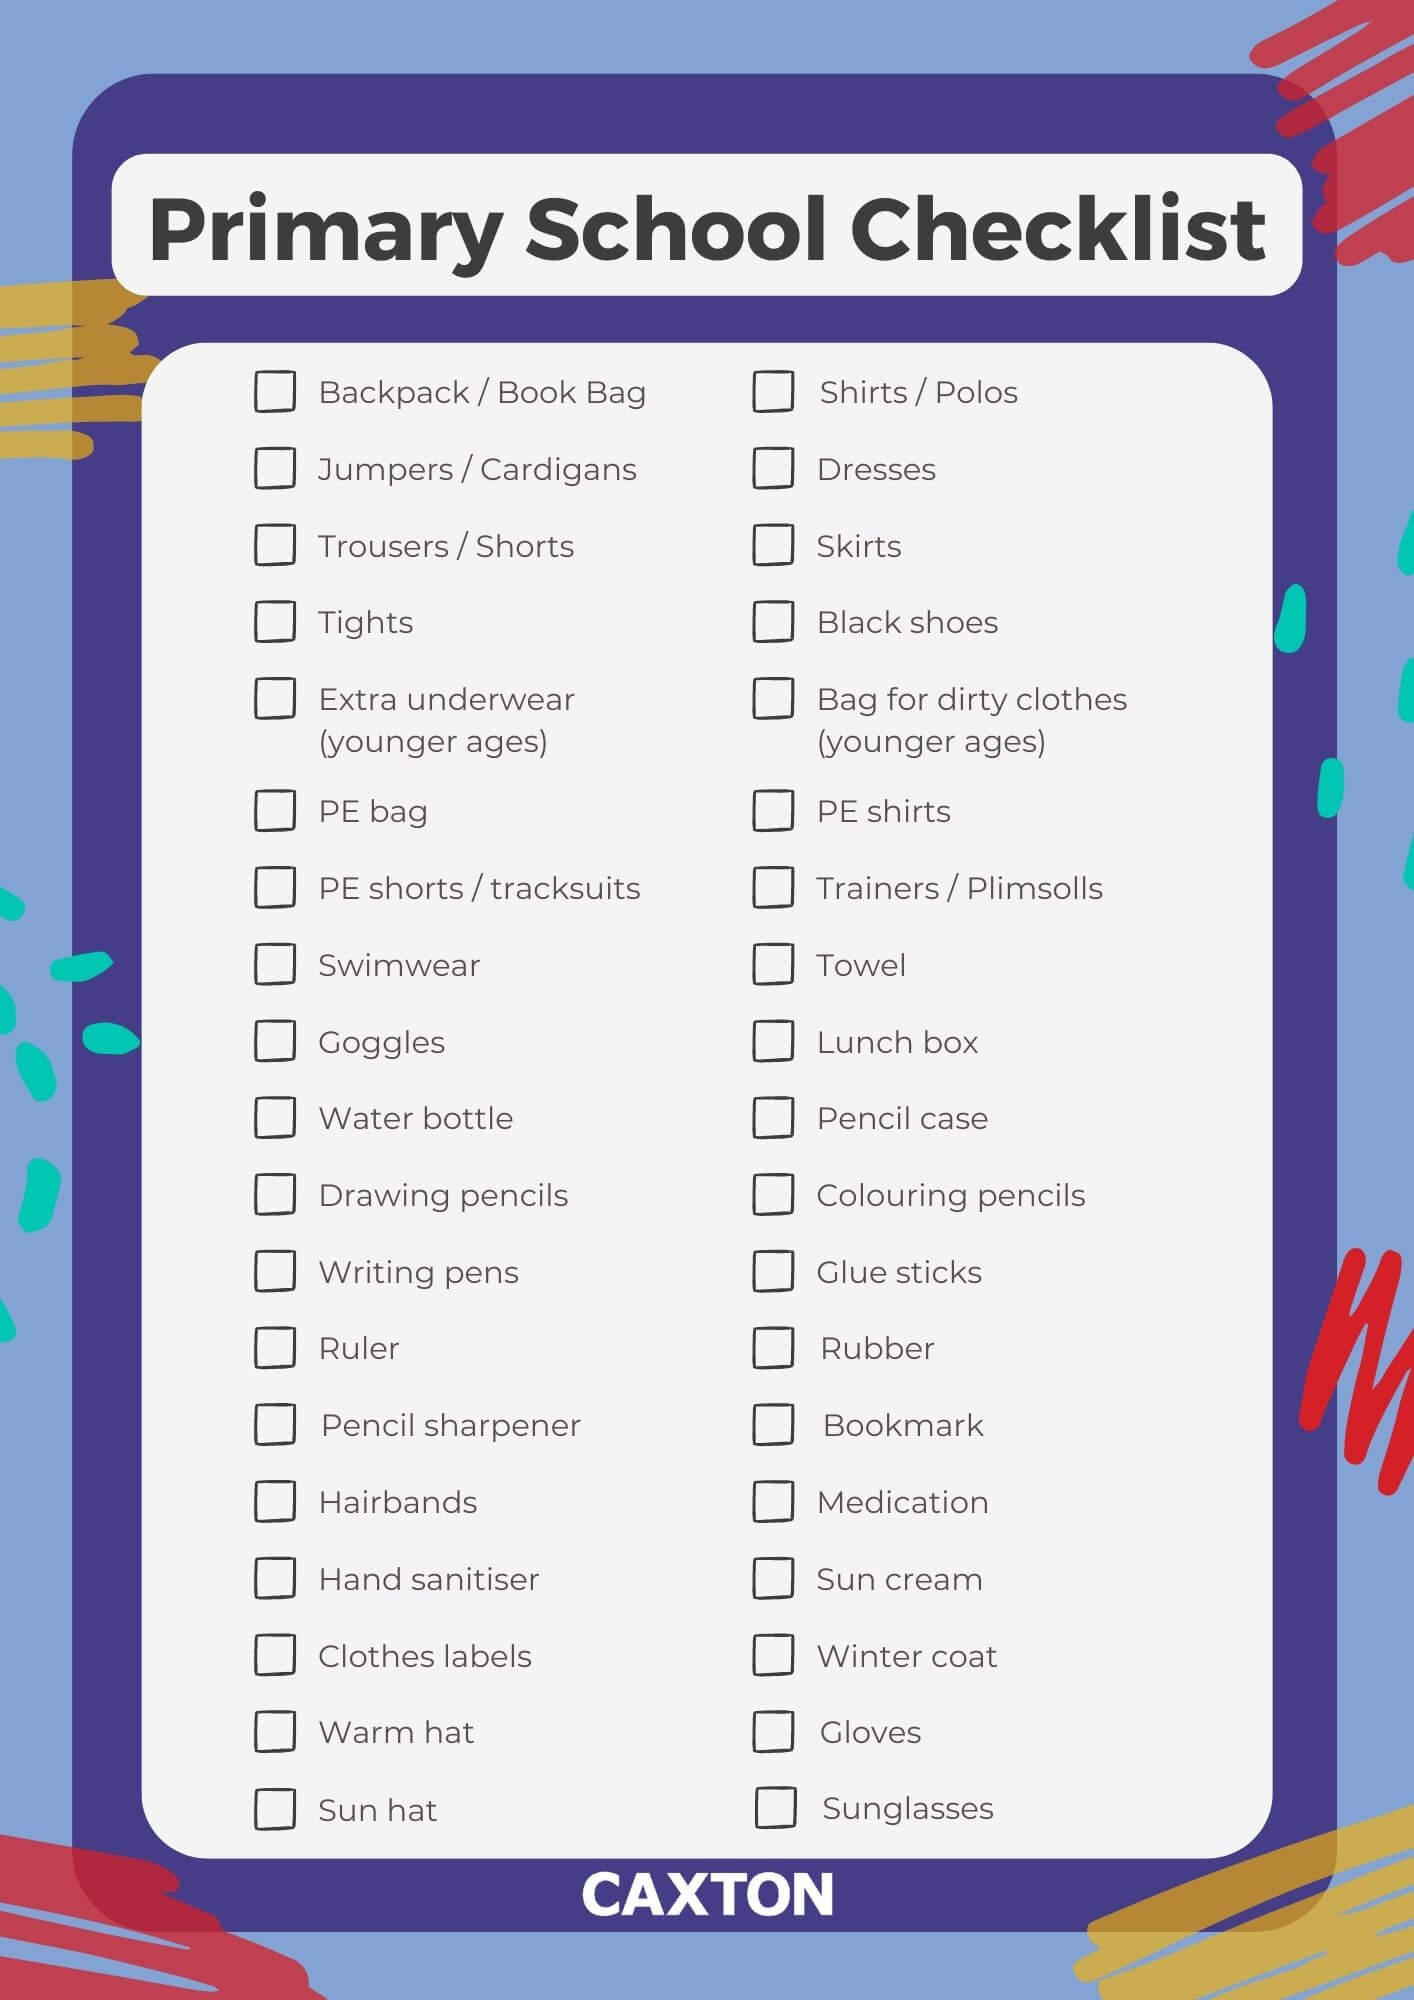 caxton-primary-school-back-to-school-checklist-ultimate-guide.jpg